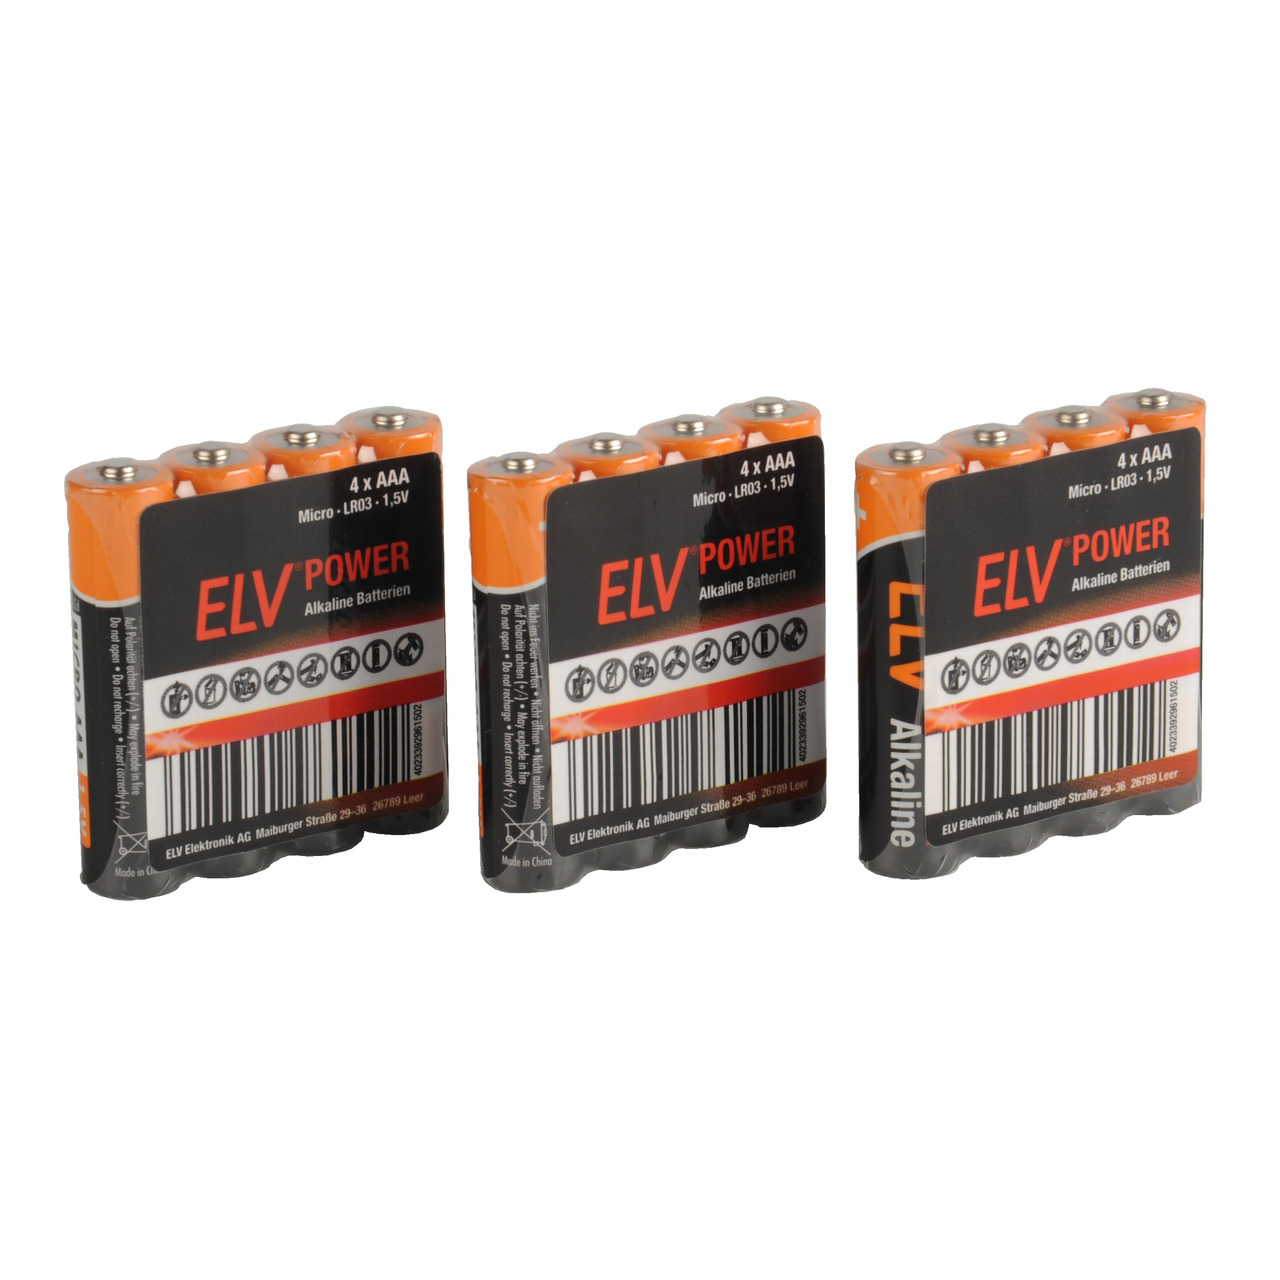 ELV POWER Alkaline Batterie Micro AAA- 12 Stck